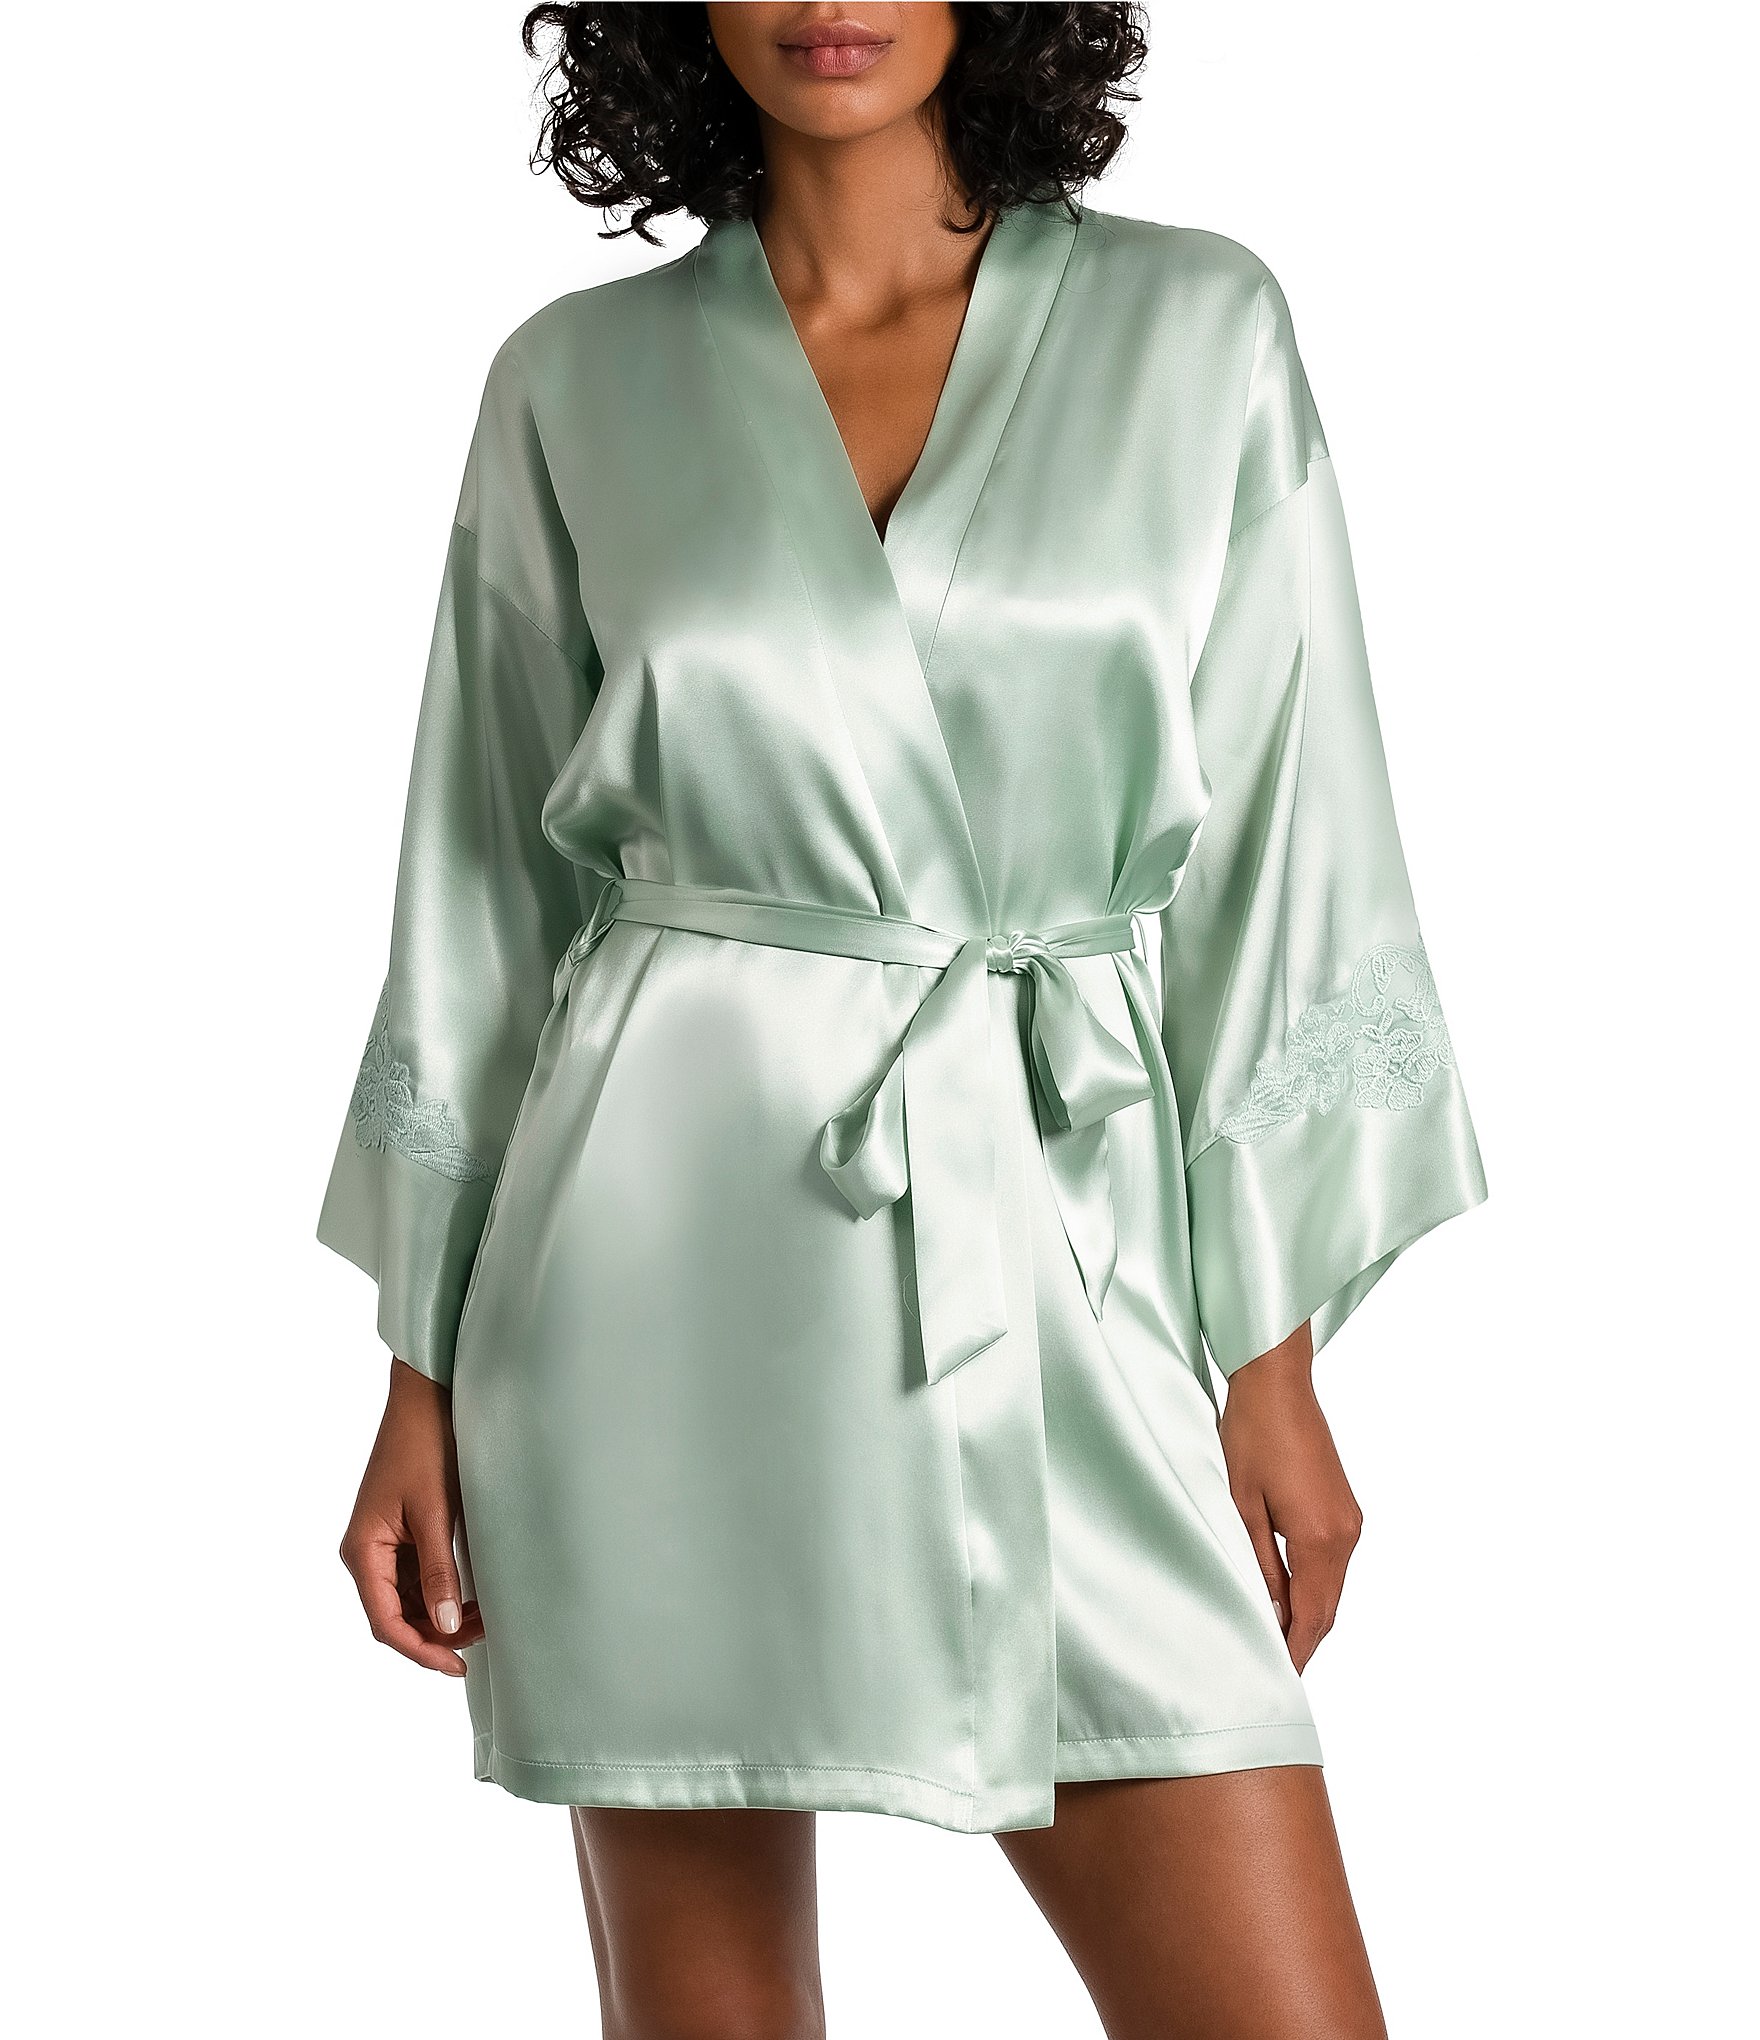 Women's Pajamas, Robes & Lingerie